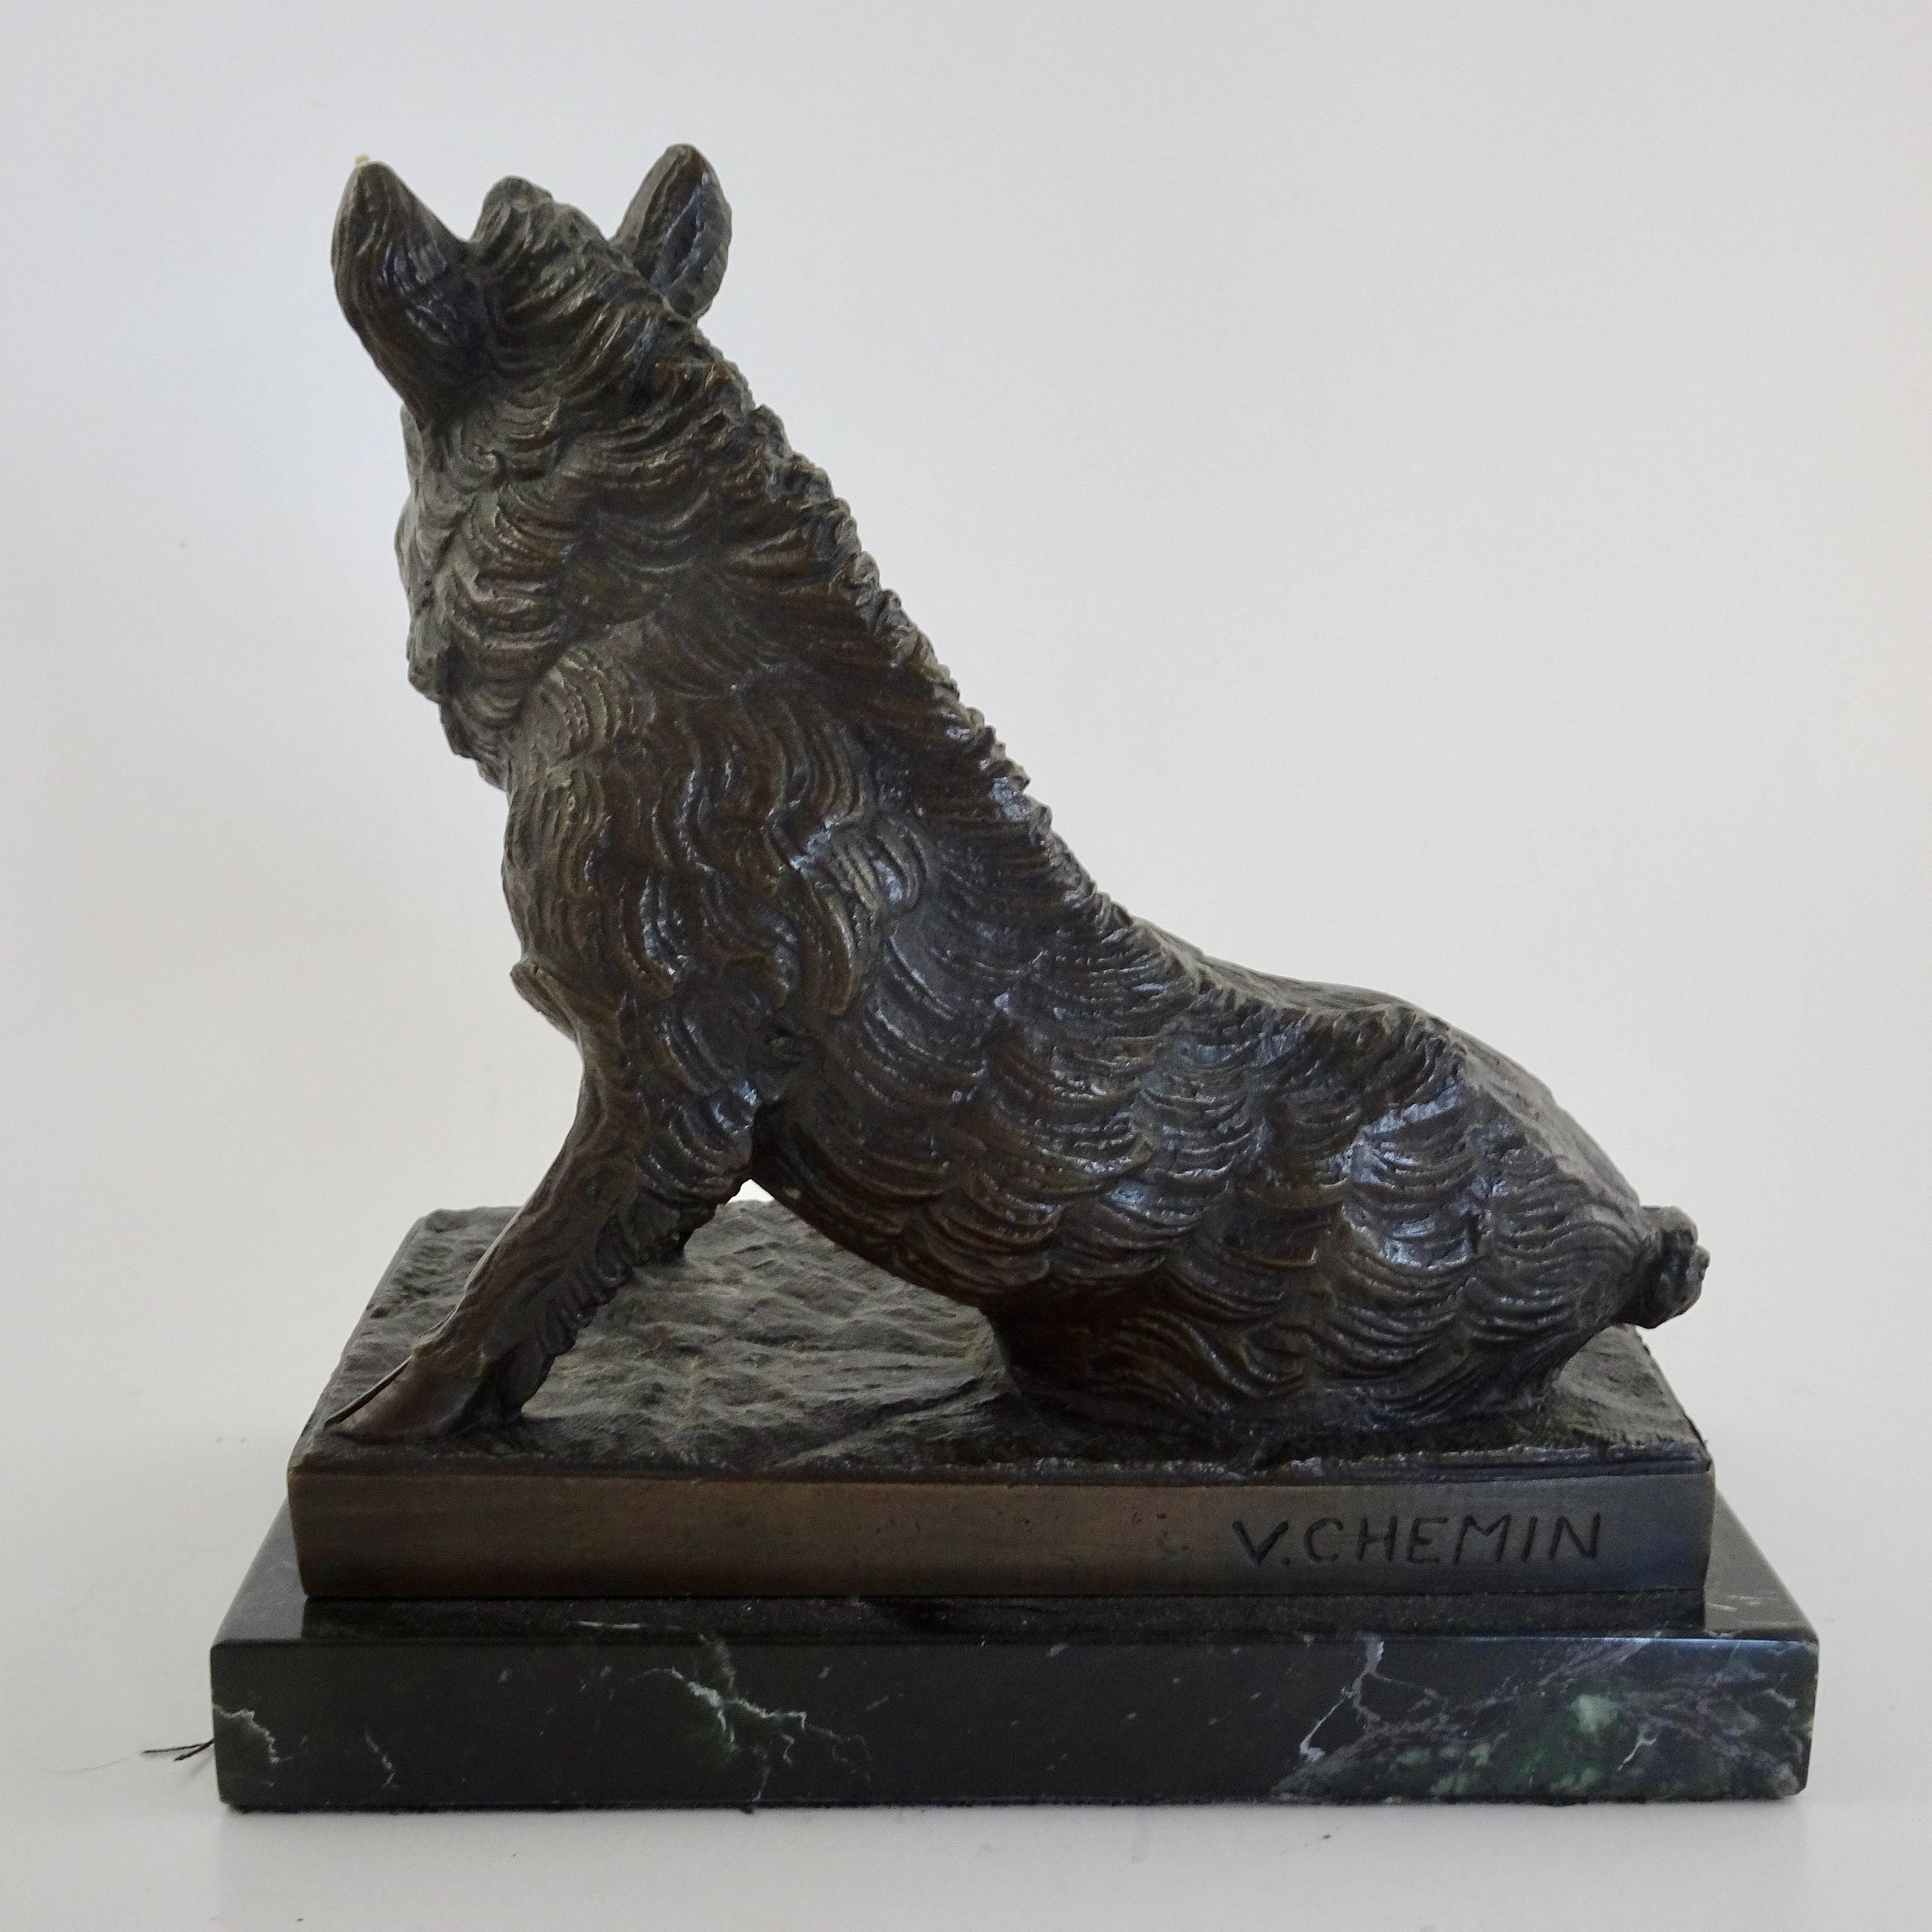 19th Century Black Bronze Boar Figurine Sculpted by Joseph Victor Chemin For Sale 3